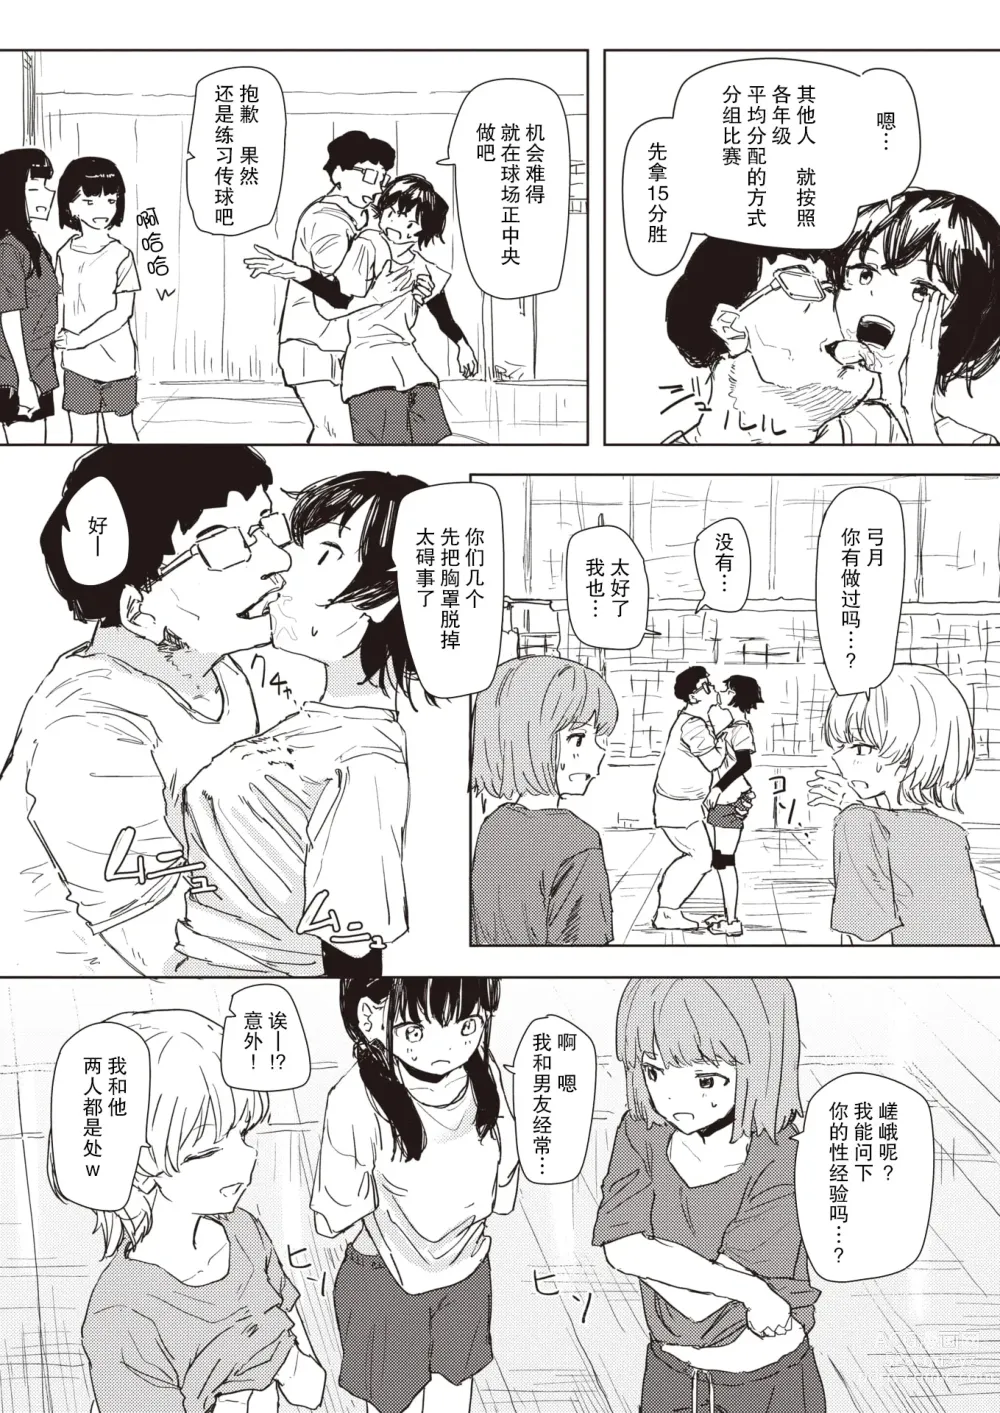 Page 11 of manga Unhappy Birthday